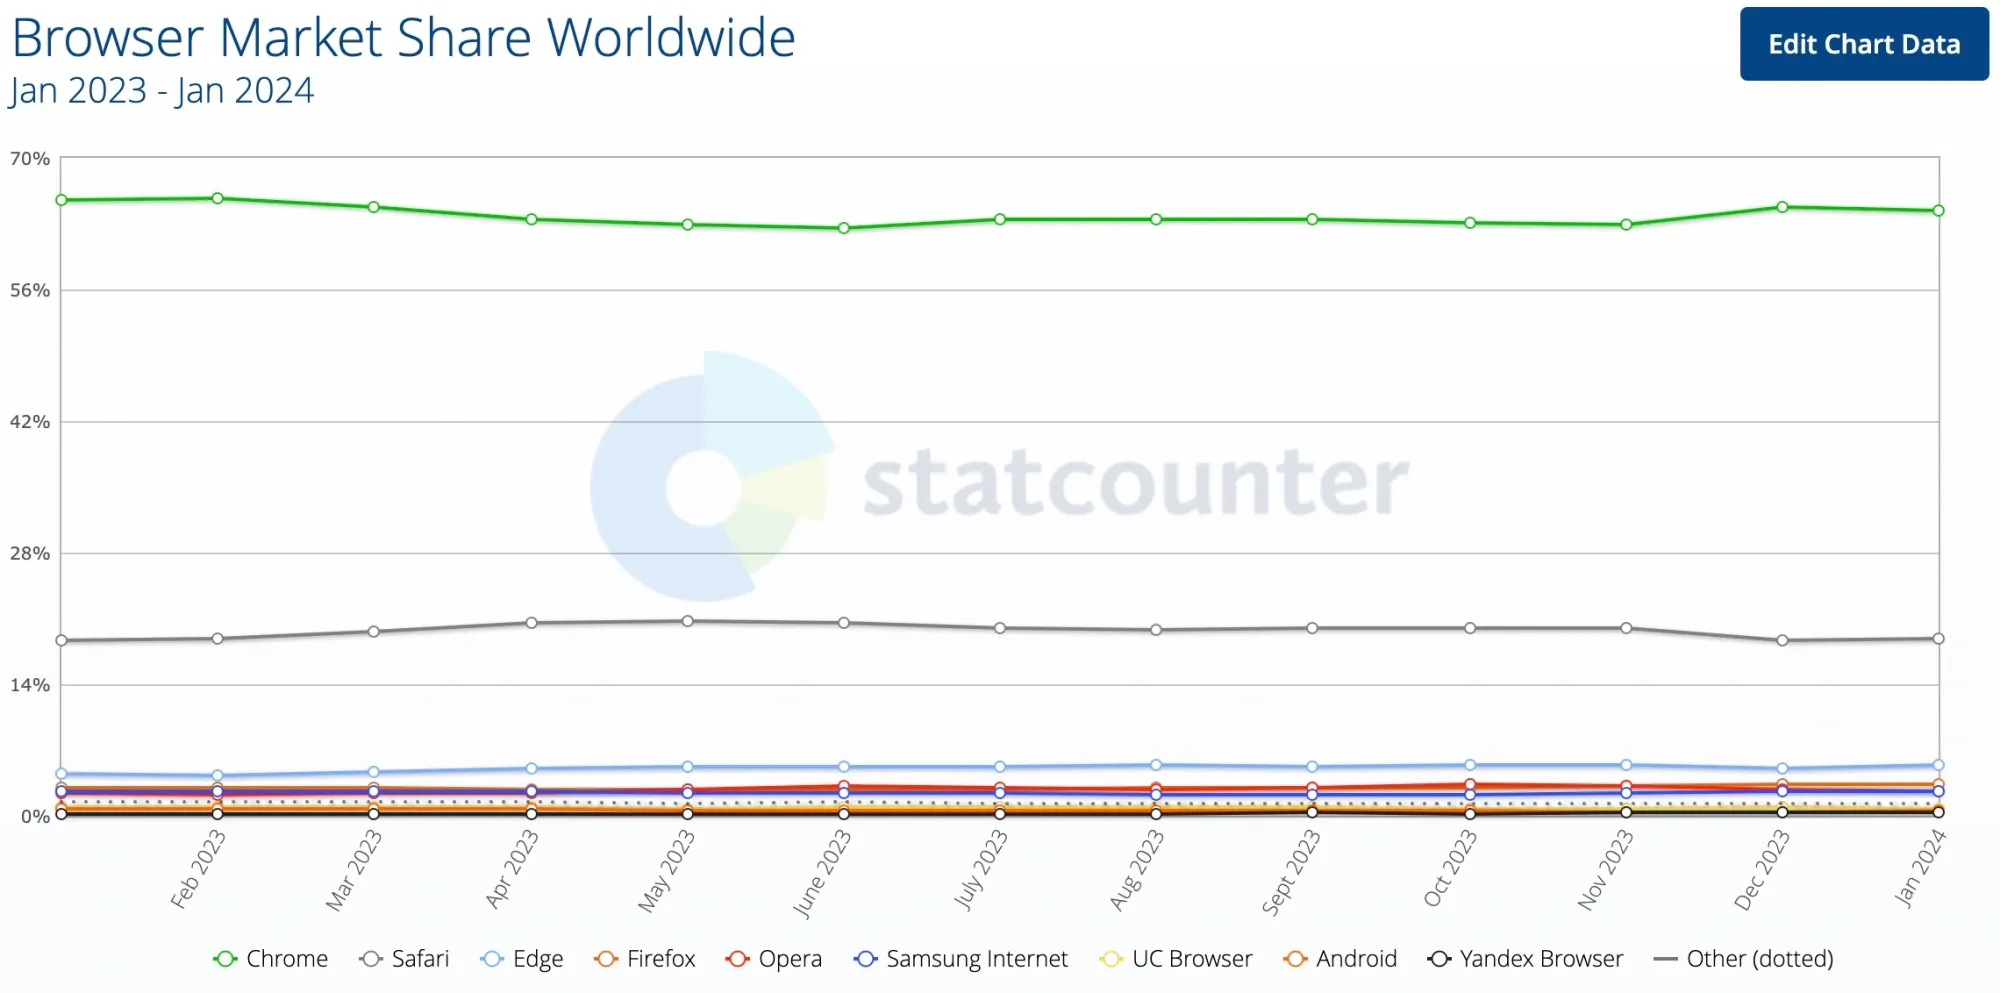 Browser market share worldwide